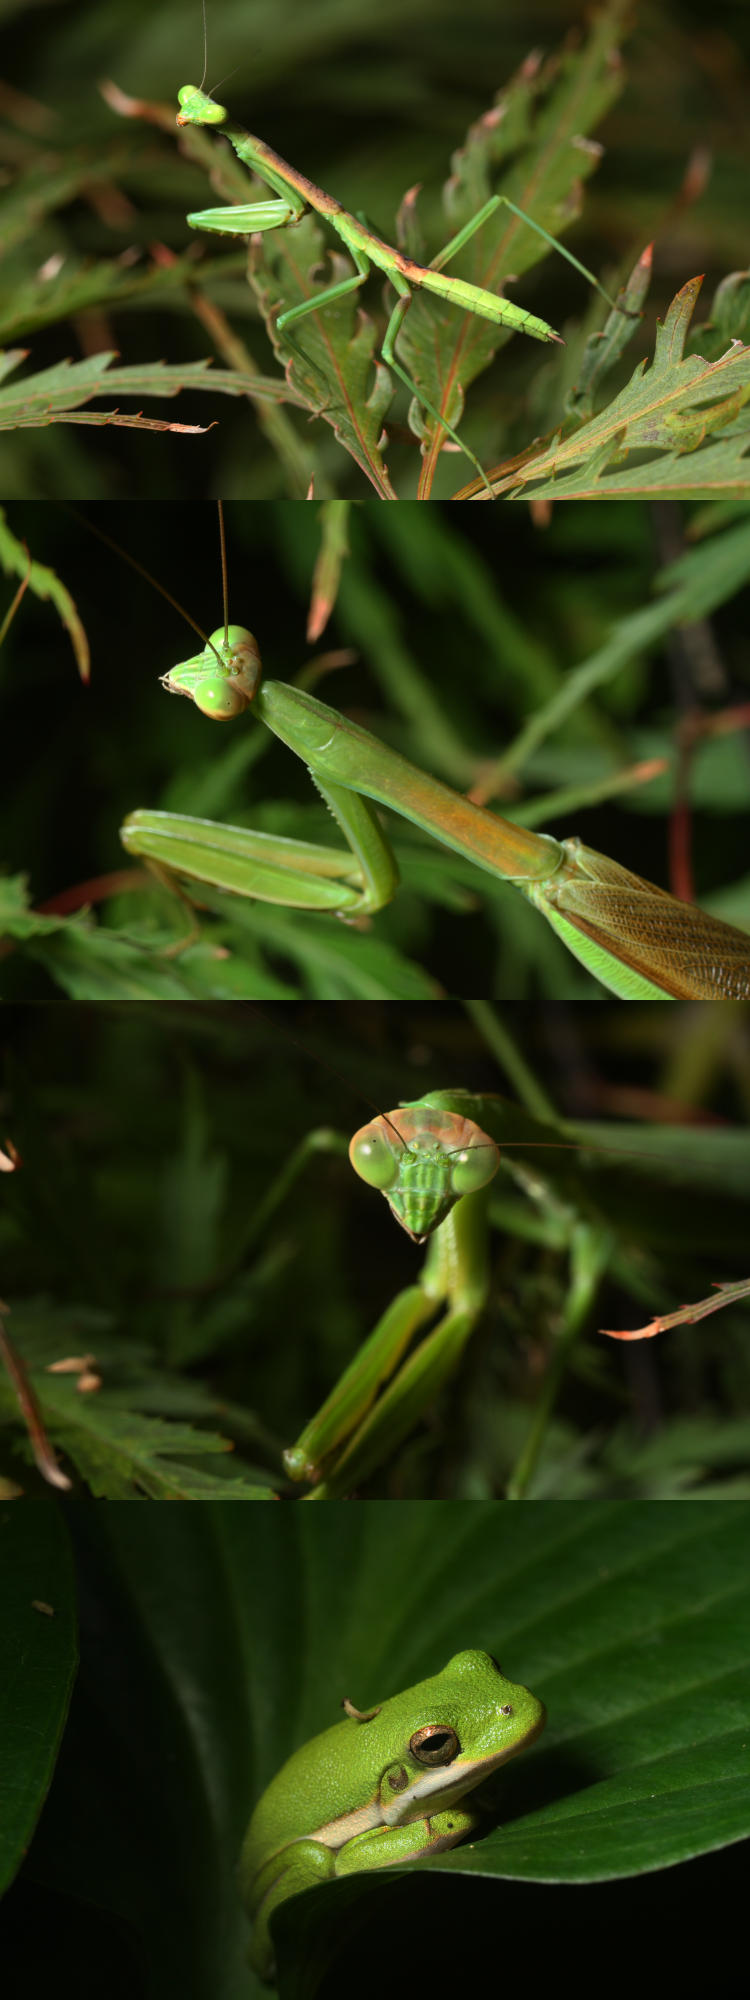 Carolina mantis Stagmomantis carolina Chinese mantis Tenodera sinensis and green treefrog Hyla cinerea all in same scale